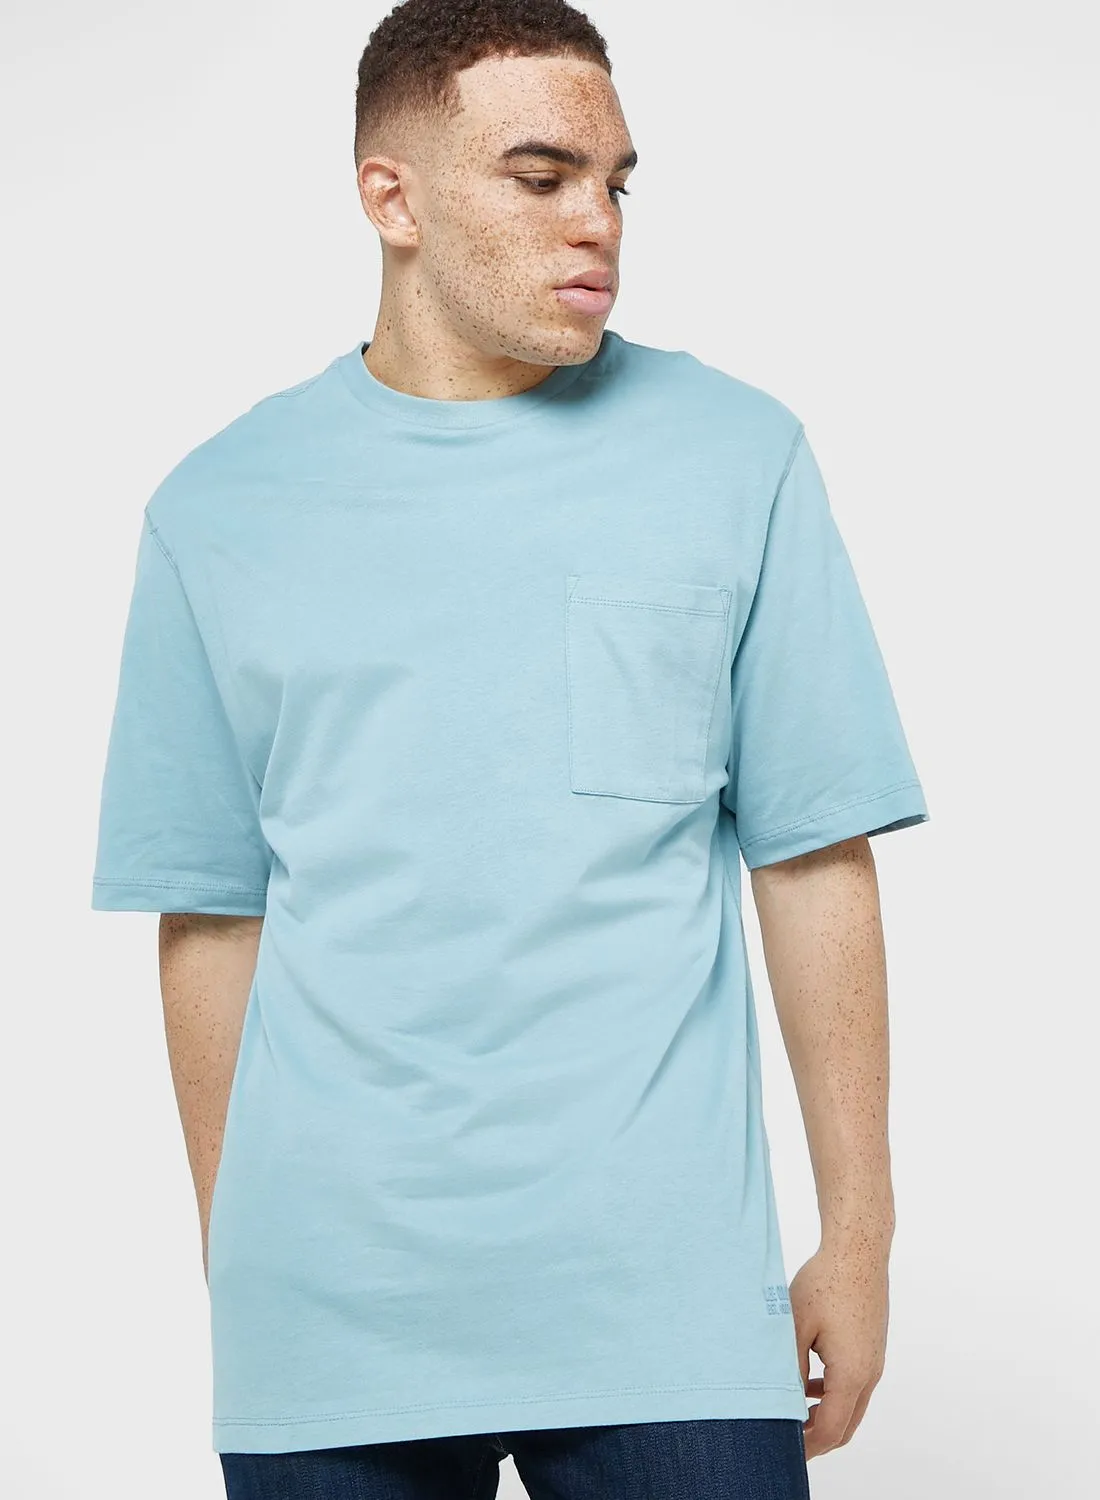 Lee Cooper Essential Crew Neck T-Shirt